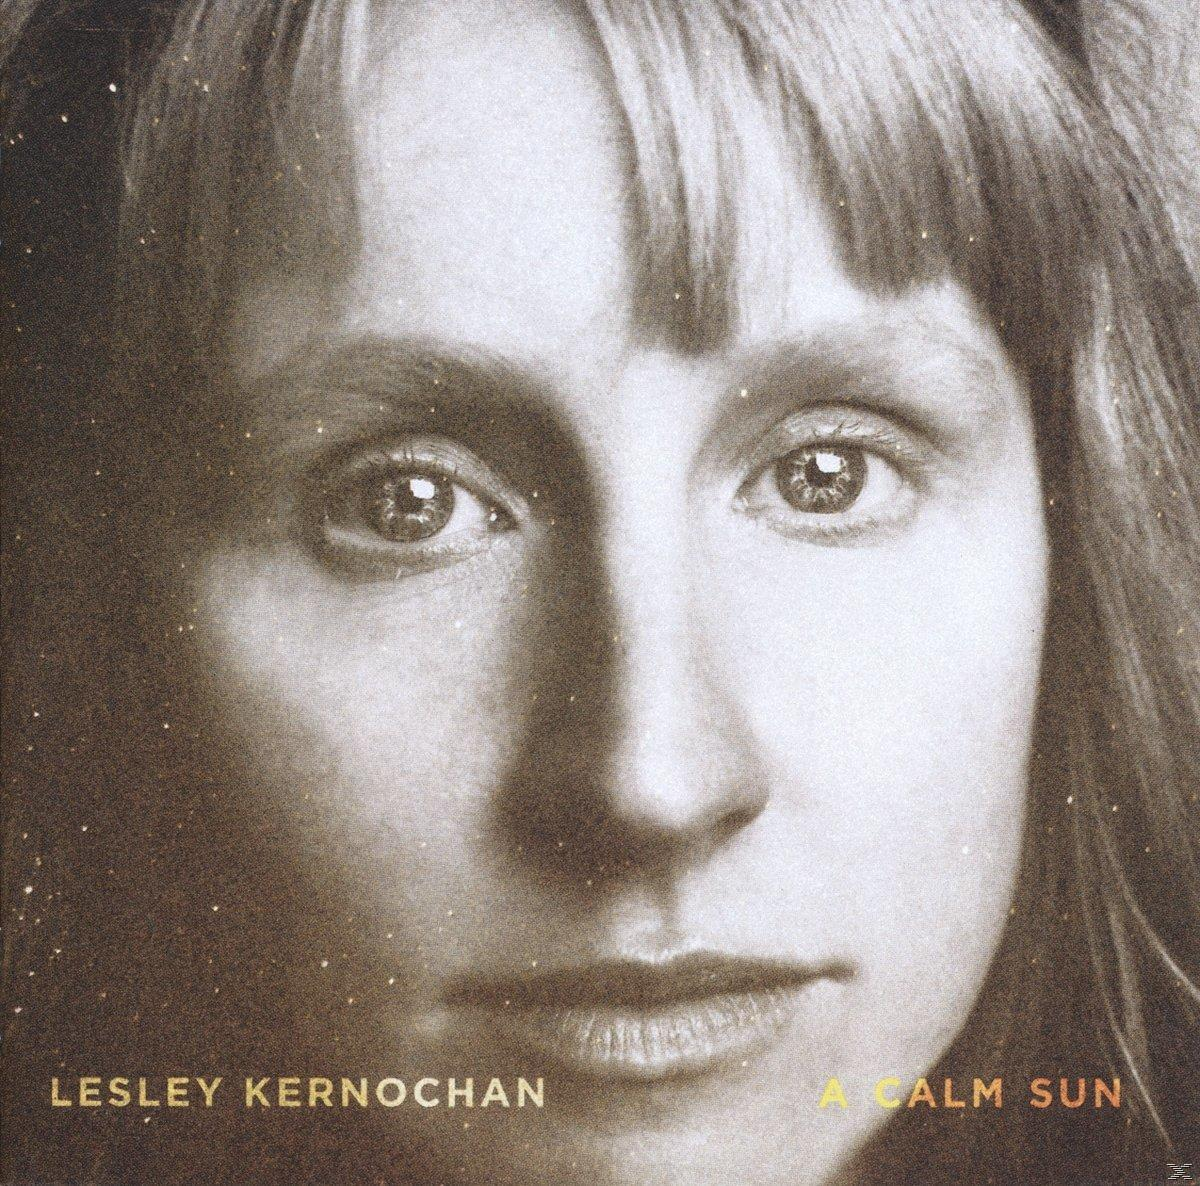 Lesley Kernochan - A Calm Sun - (CD)